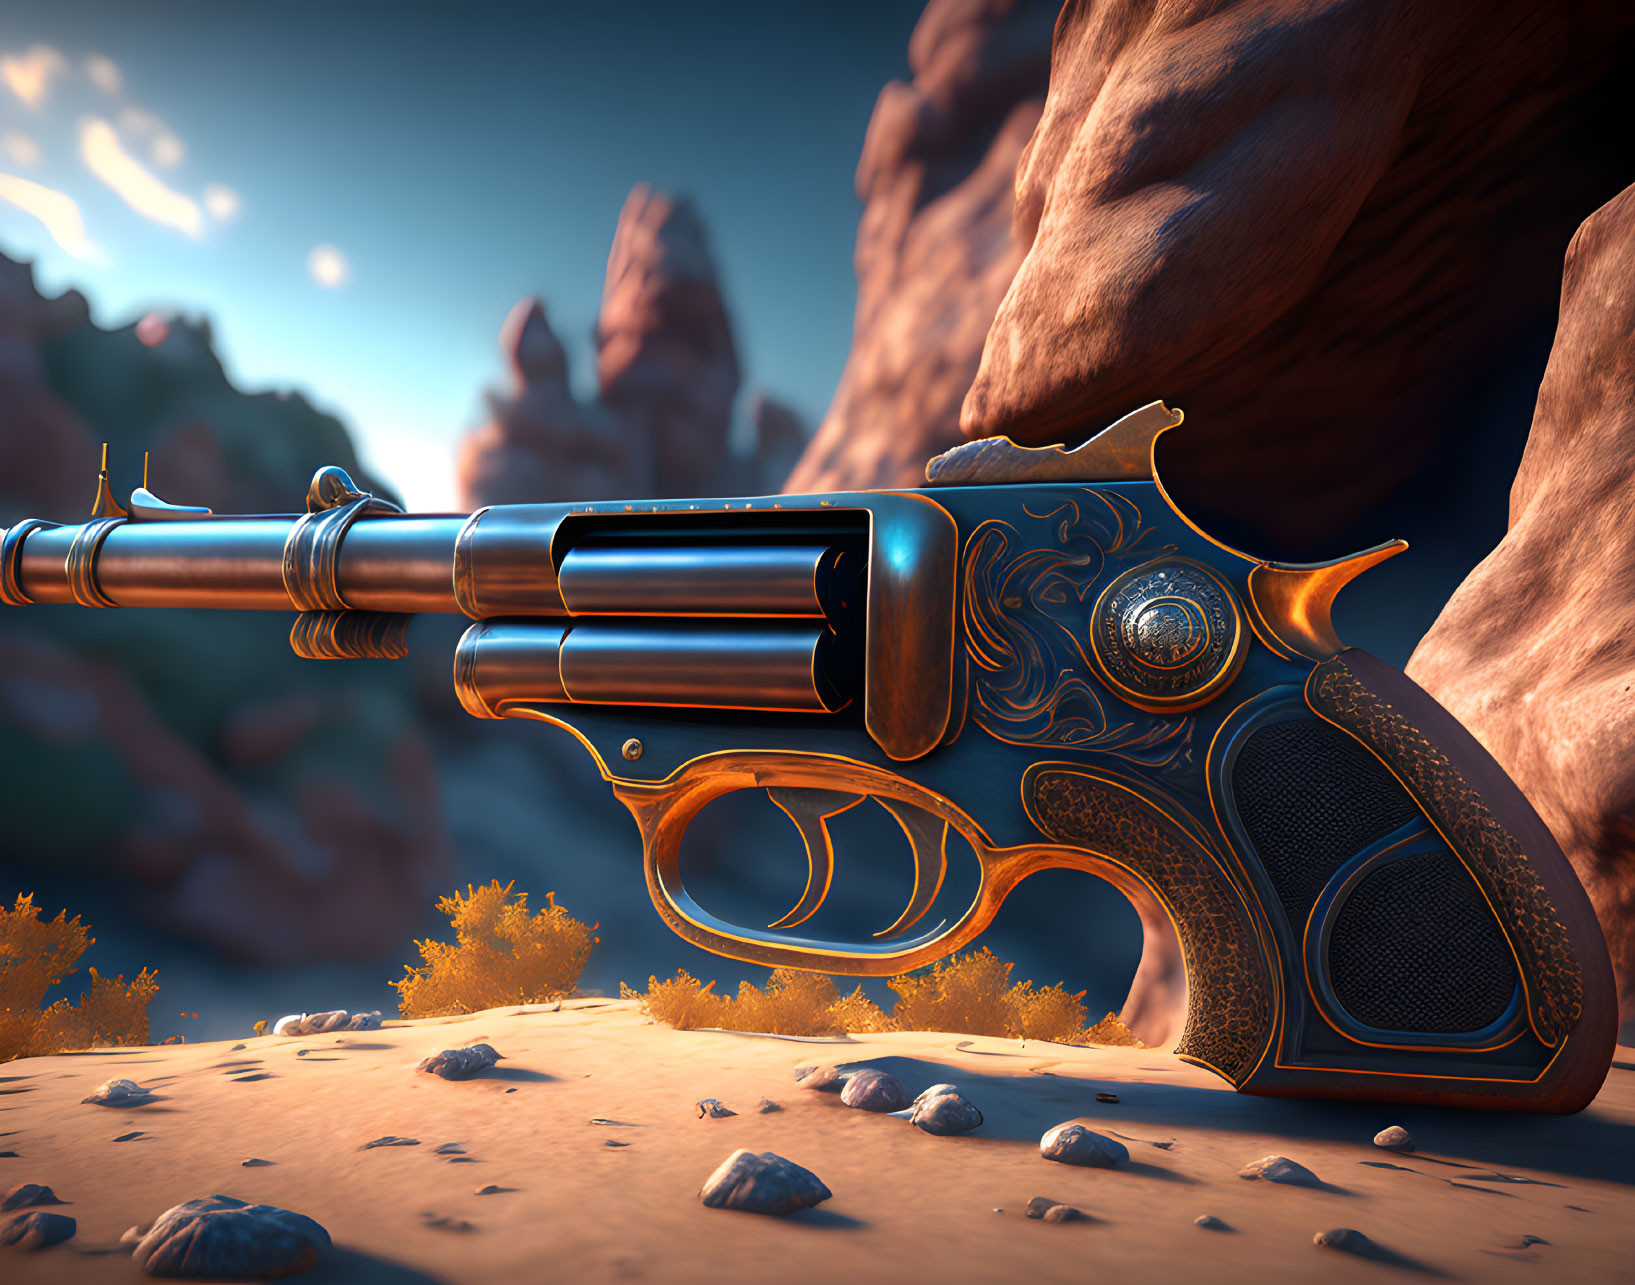 Ornate patterned revolver against desert canyon backdrop